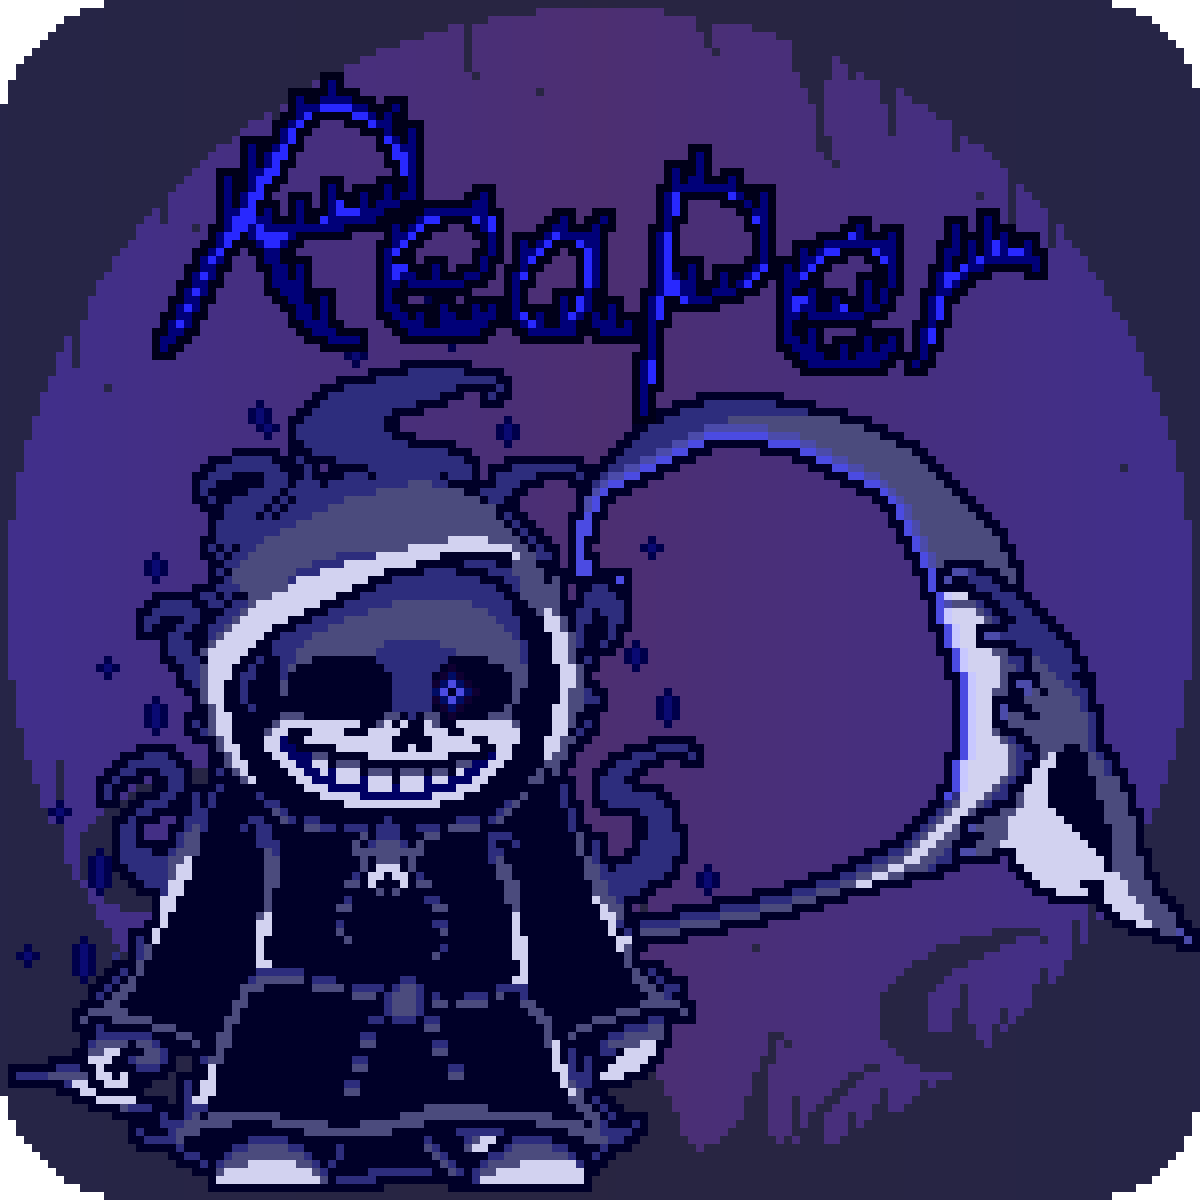 Reaper Sans by JStheWolfblood on DeviantArt